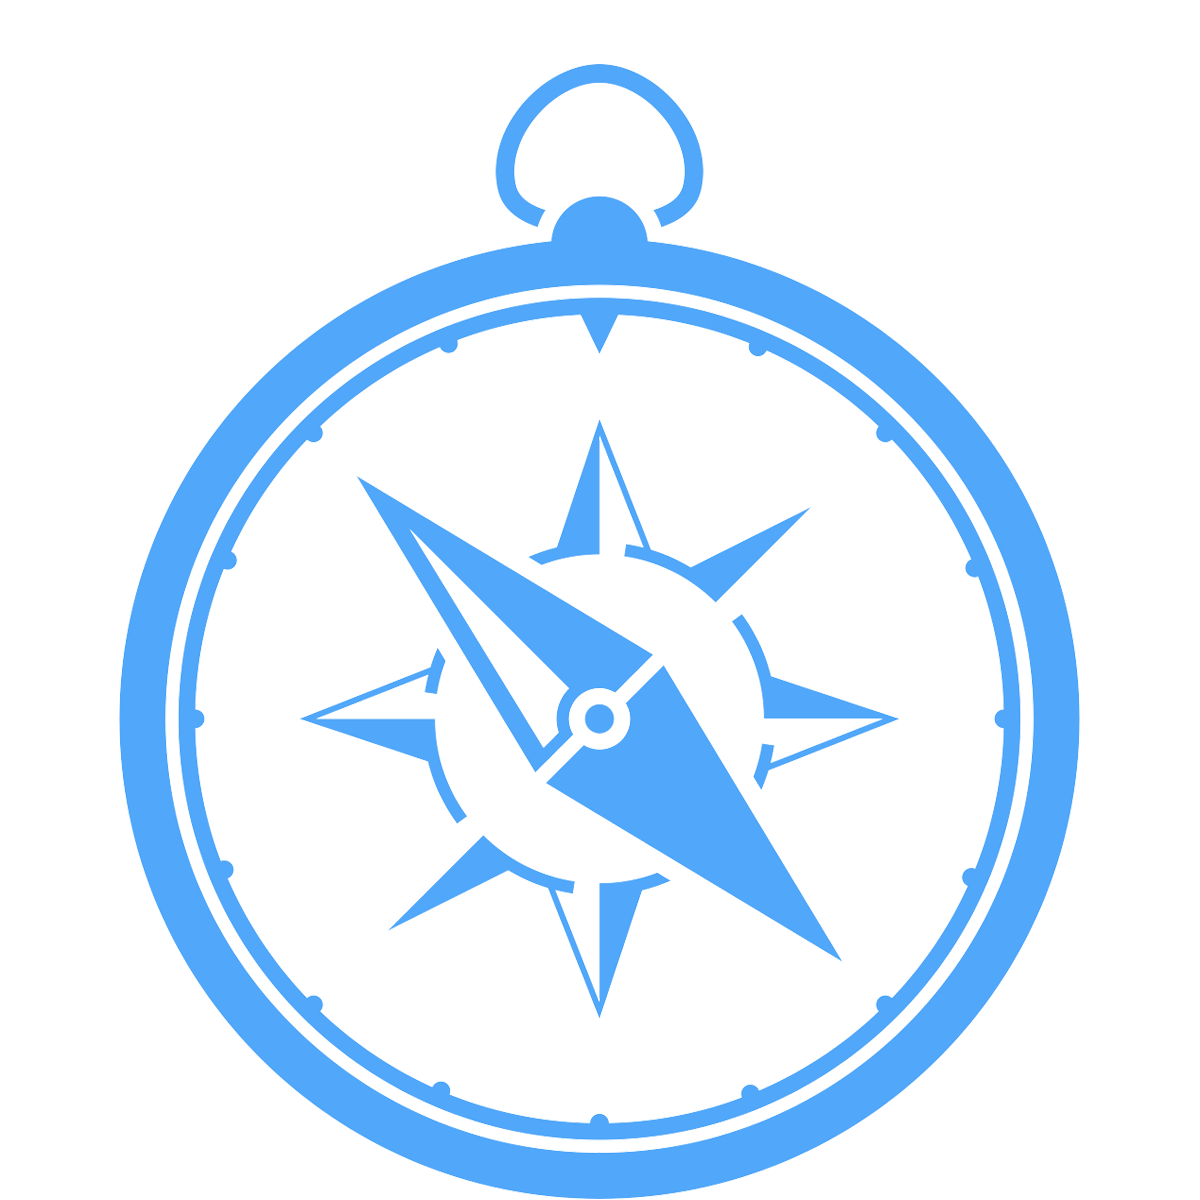 Navigation icon - a compass